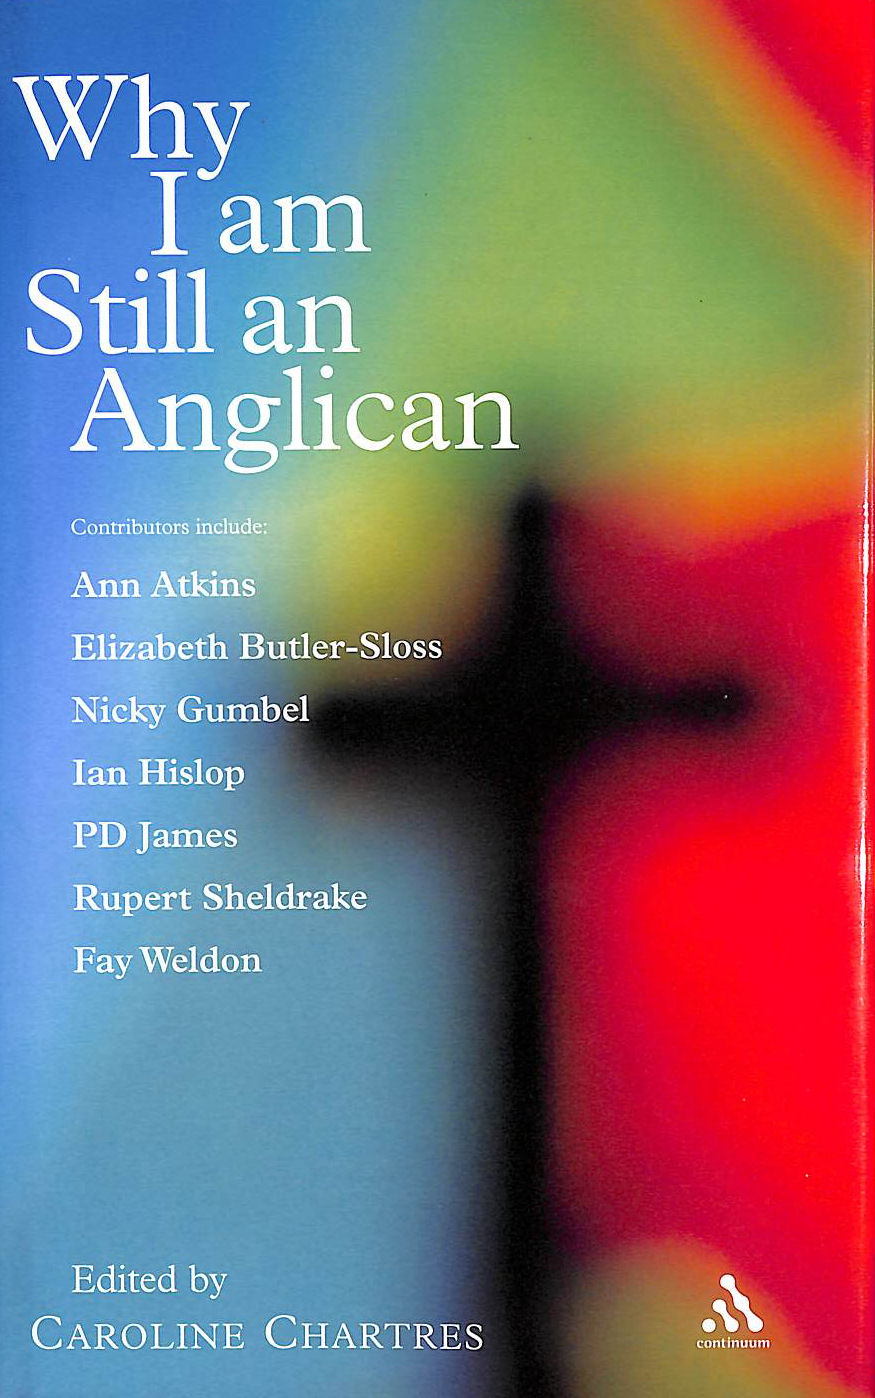 CHARTRES, CAROLINE [EDITOR] - Why I am Still an Anglican